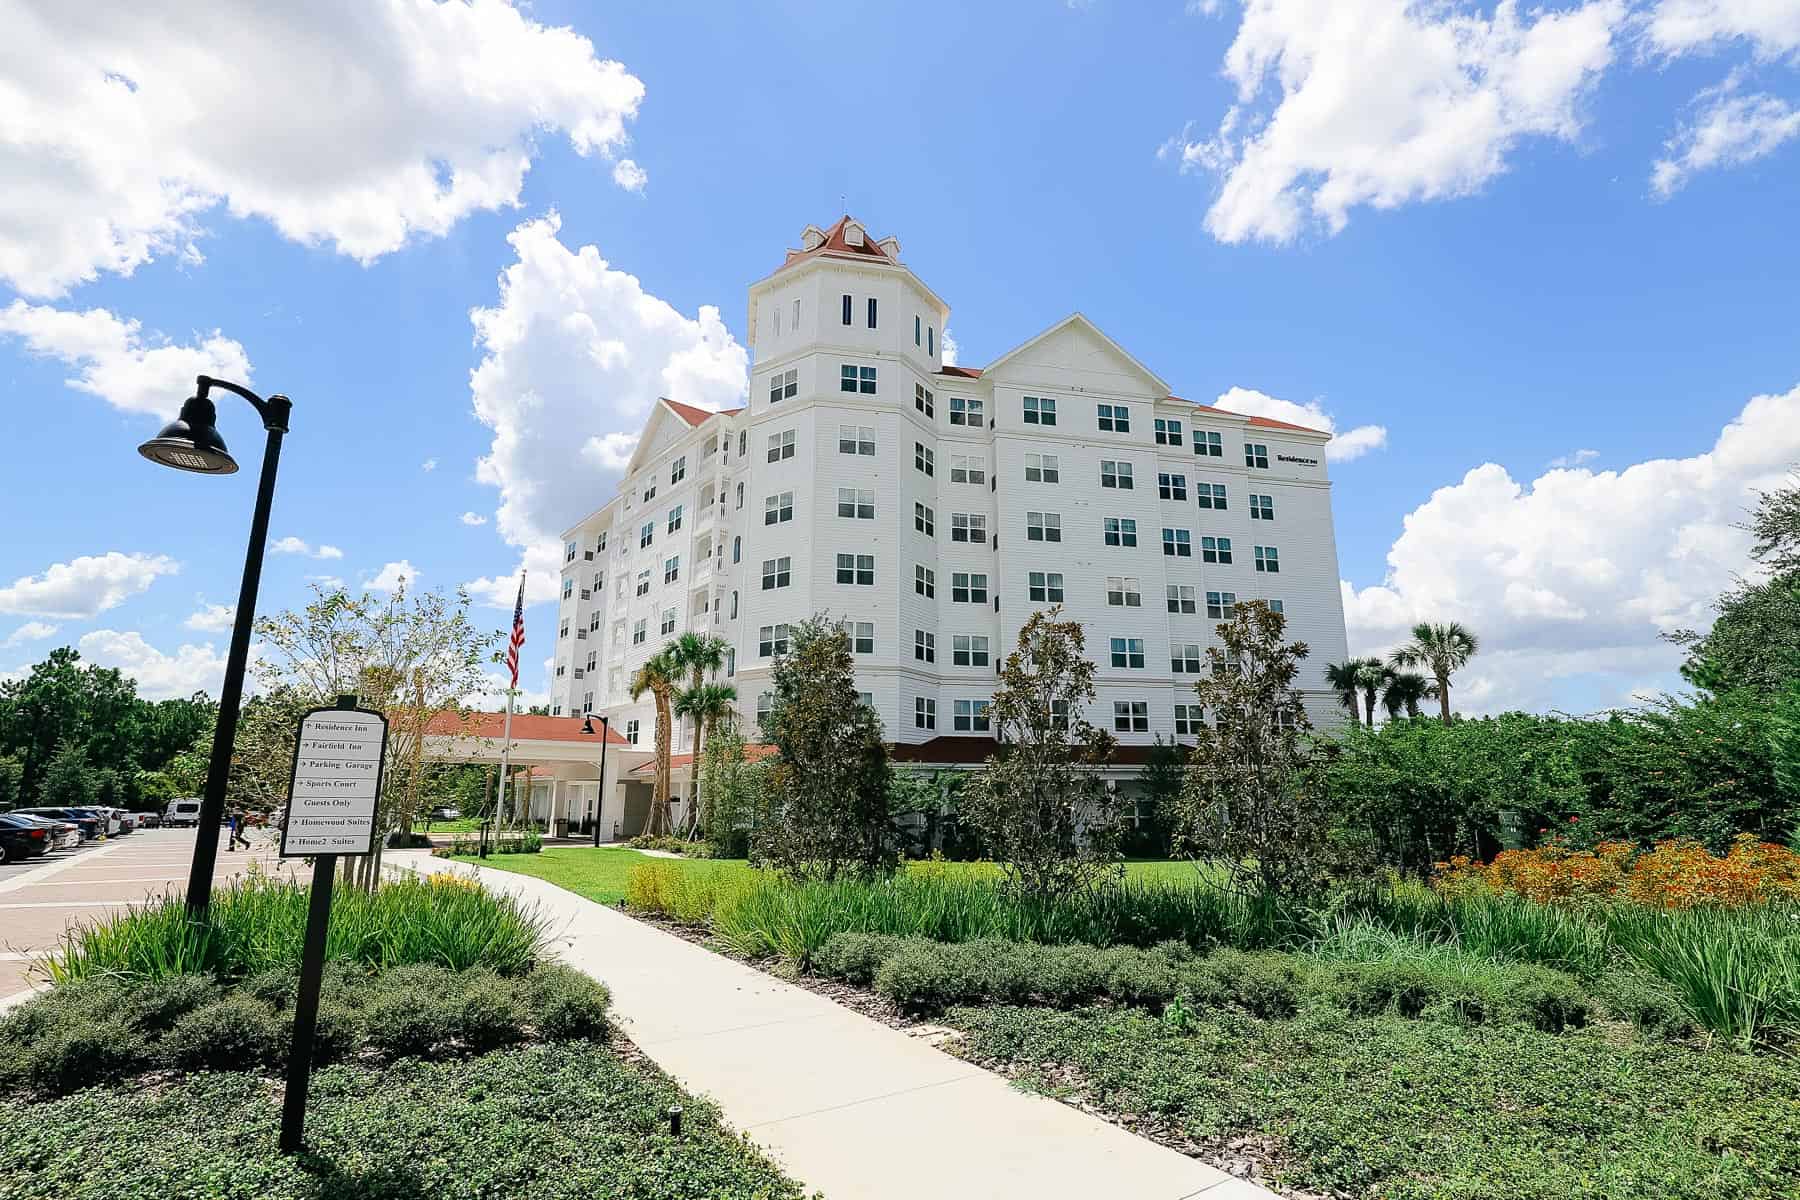 Residence Inn at Flamingo Crossings close to Disney World's gate. 